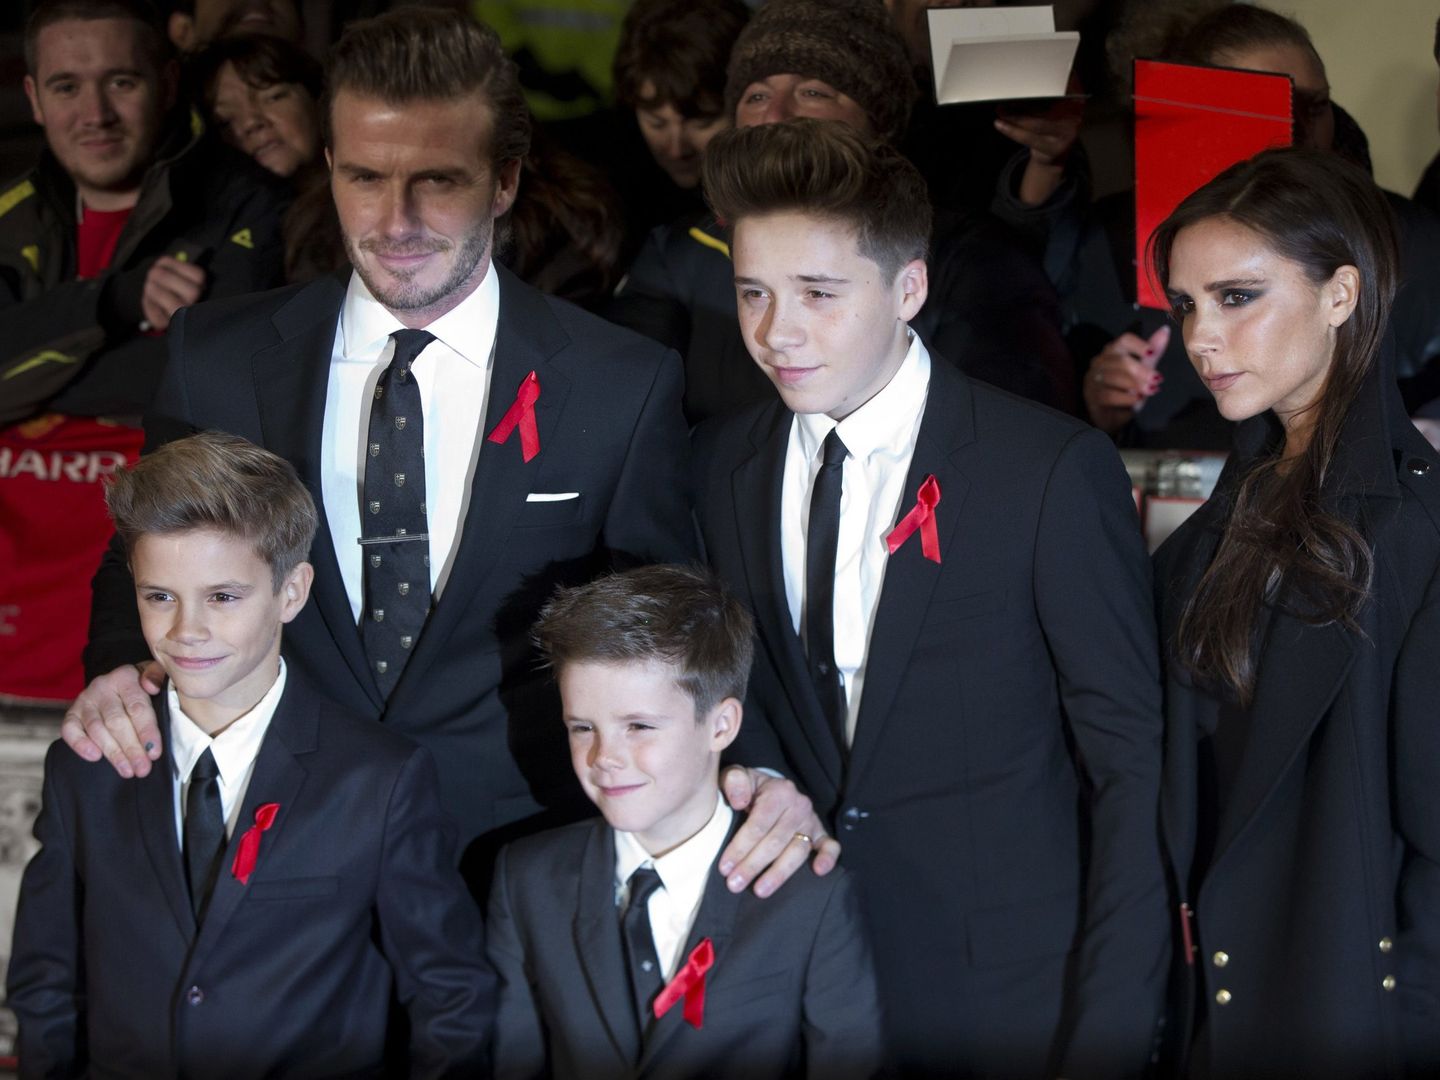 El matrimonio Beckham, con sus tres hijos mayores. (Reuters)